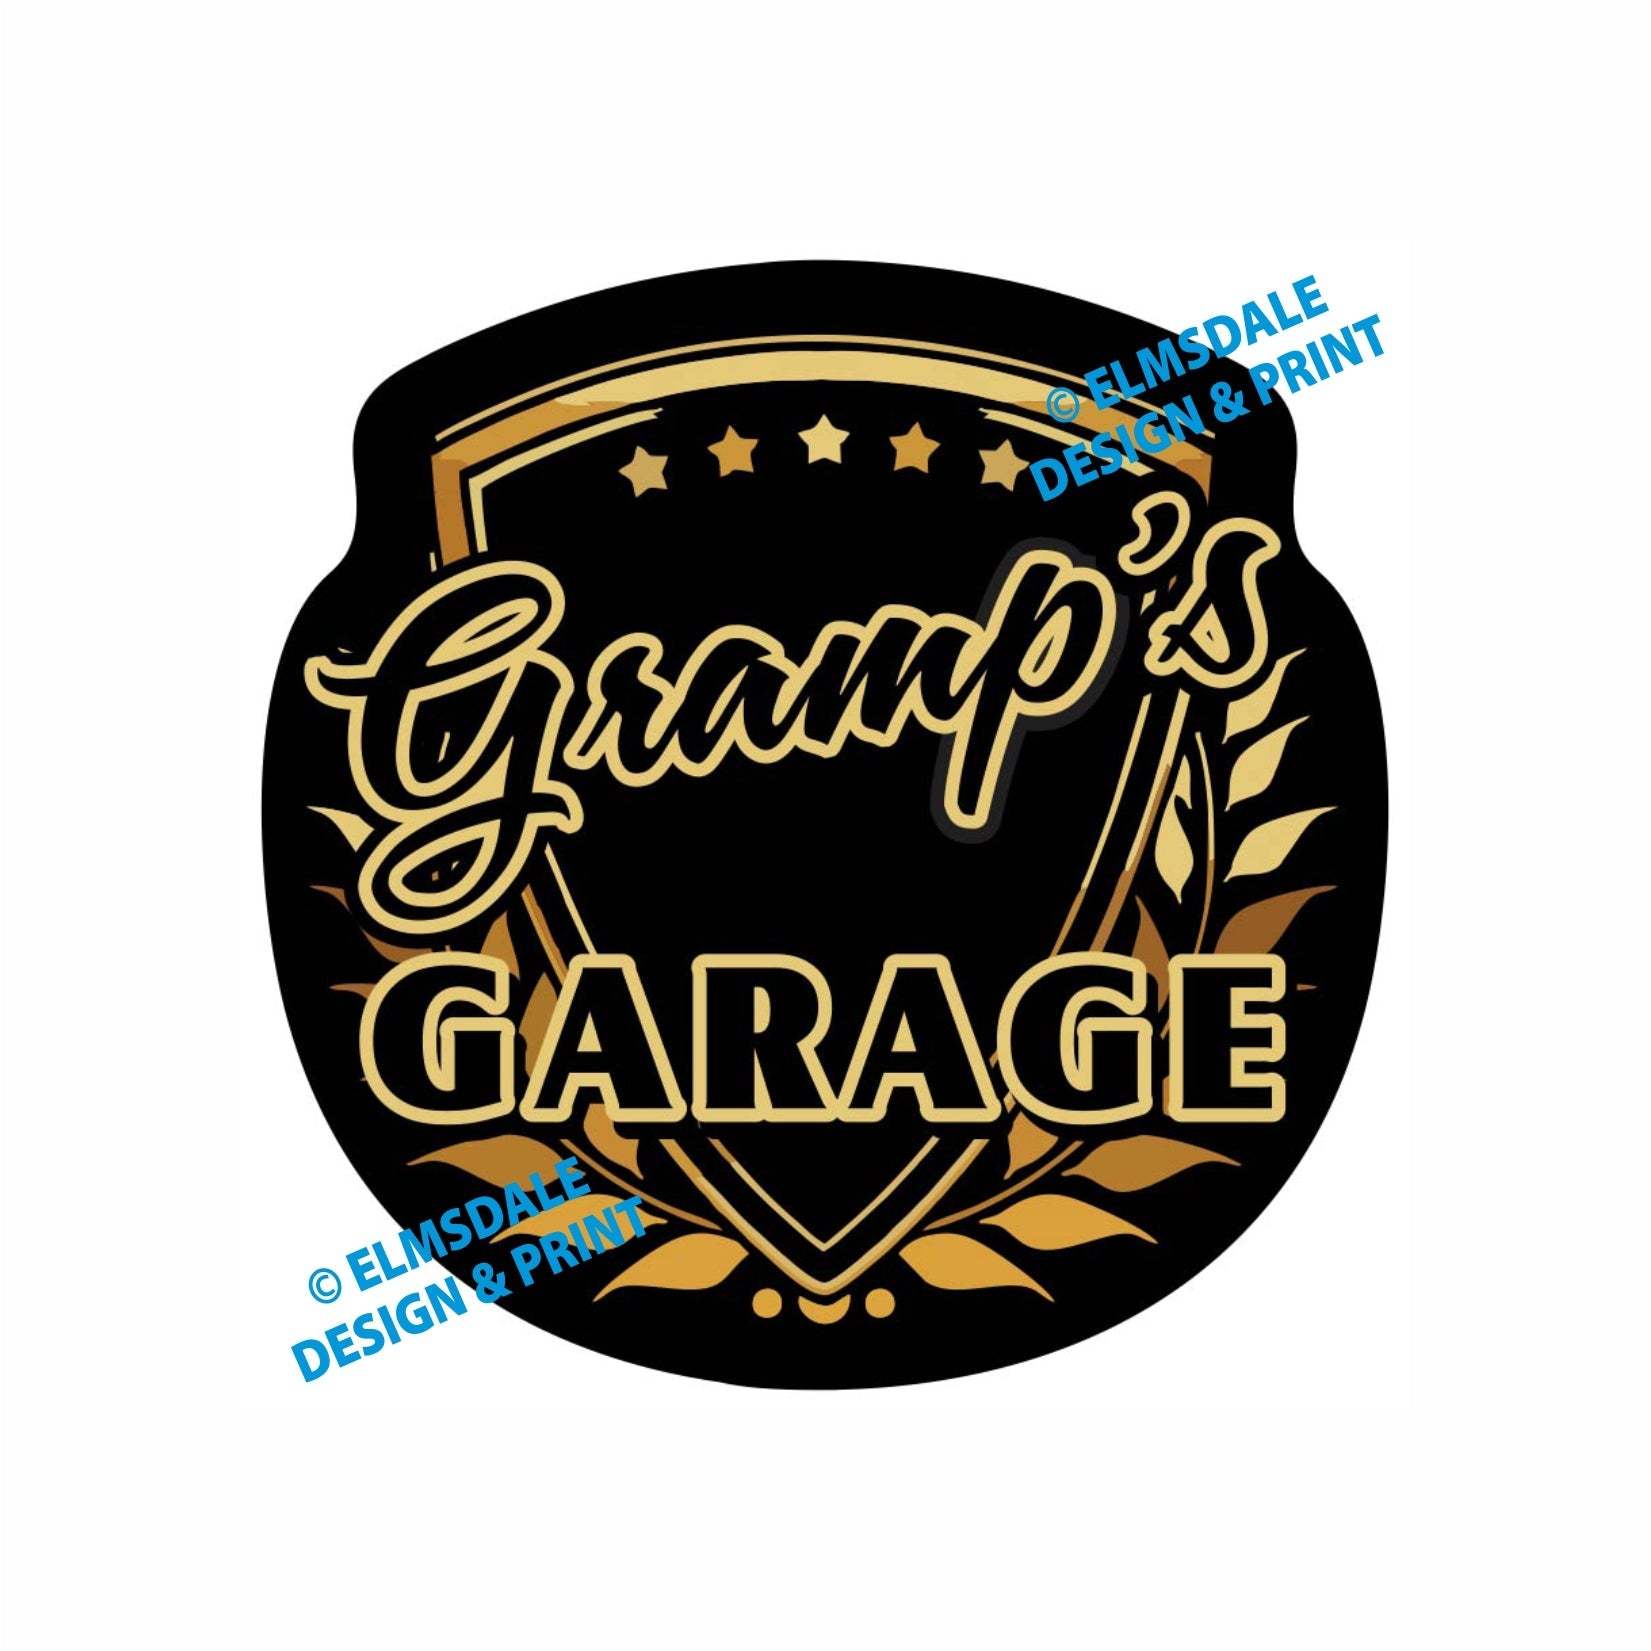 Gramps Garage - Decal / 9.25’ x 9.25’ / Gold & Black